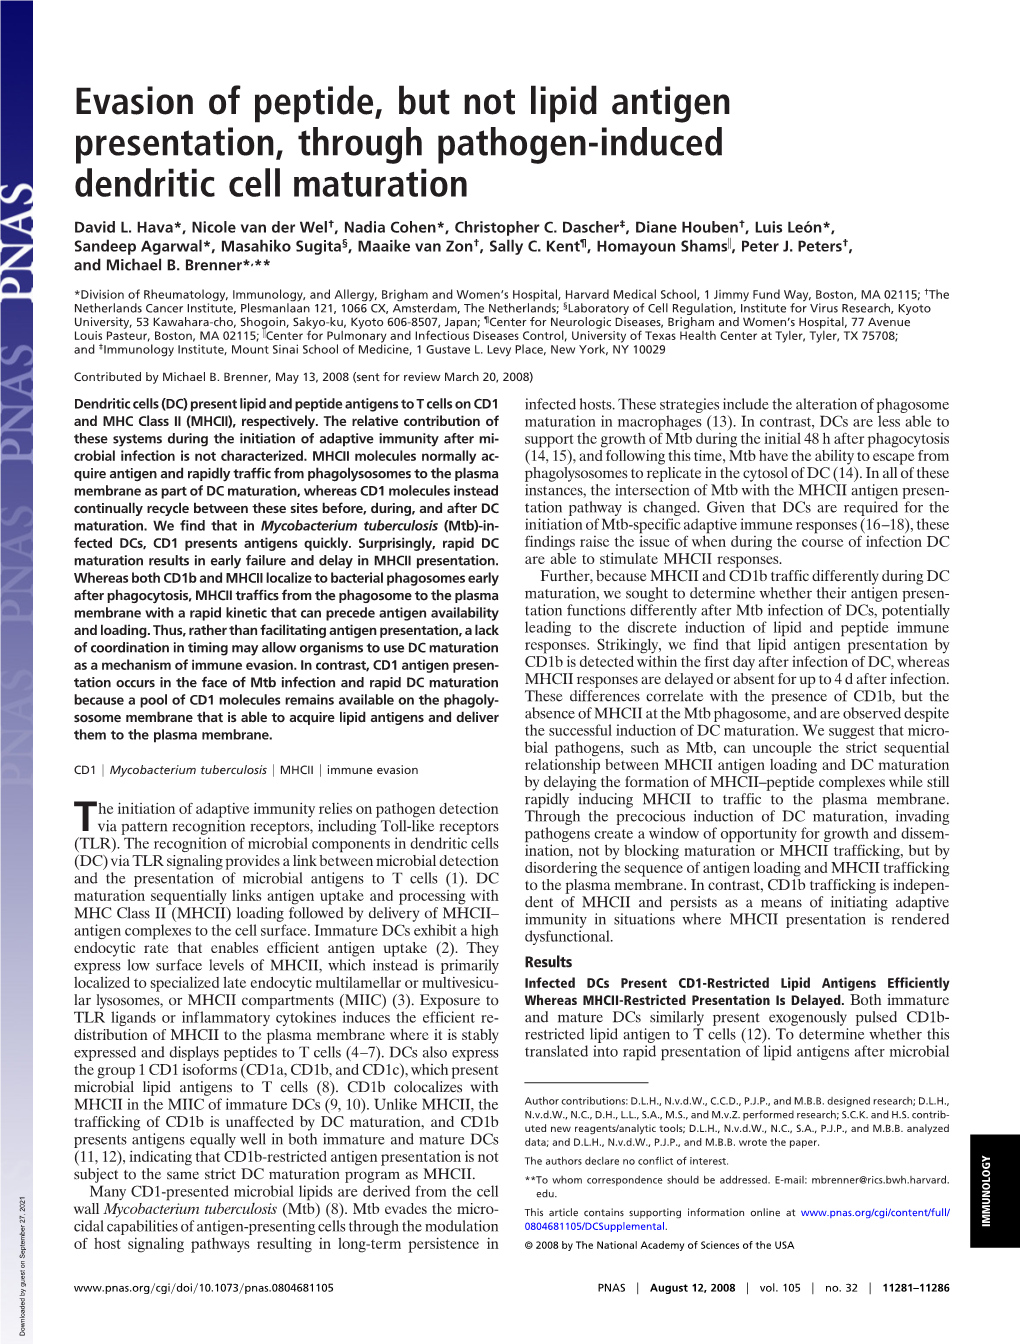 Evasion of Peptide, but Not Lipid Antigen Presentation, Through Pathogen-Induced Dendritic Cell Maturation